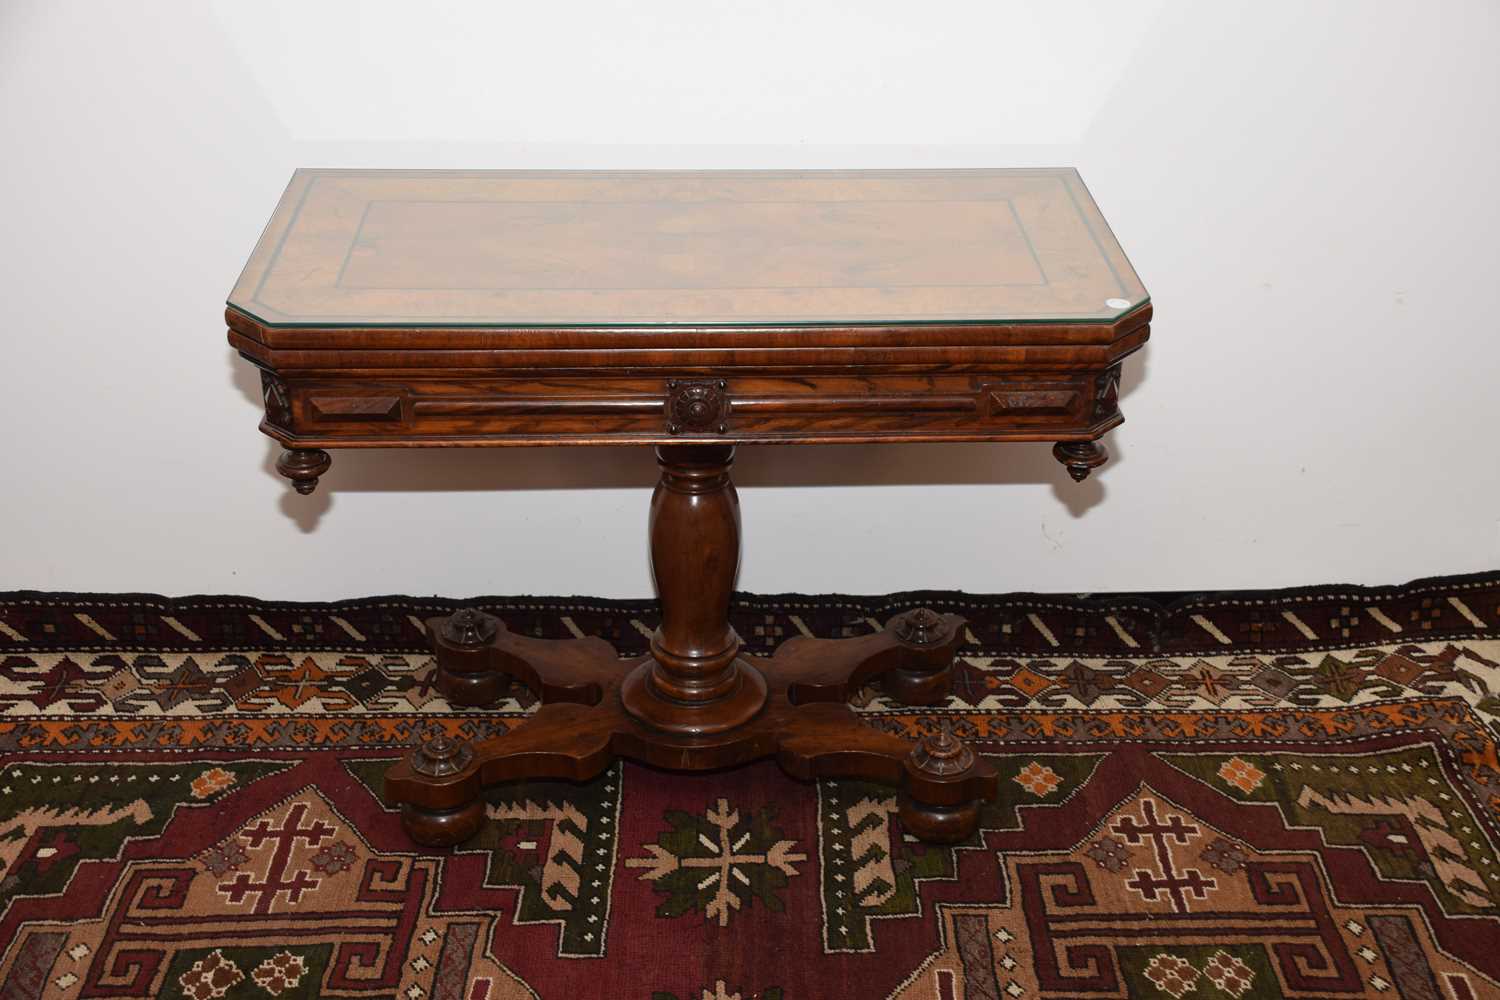 Lot 28 - A Victorian walnut and ebony inlaid card table